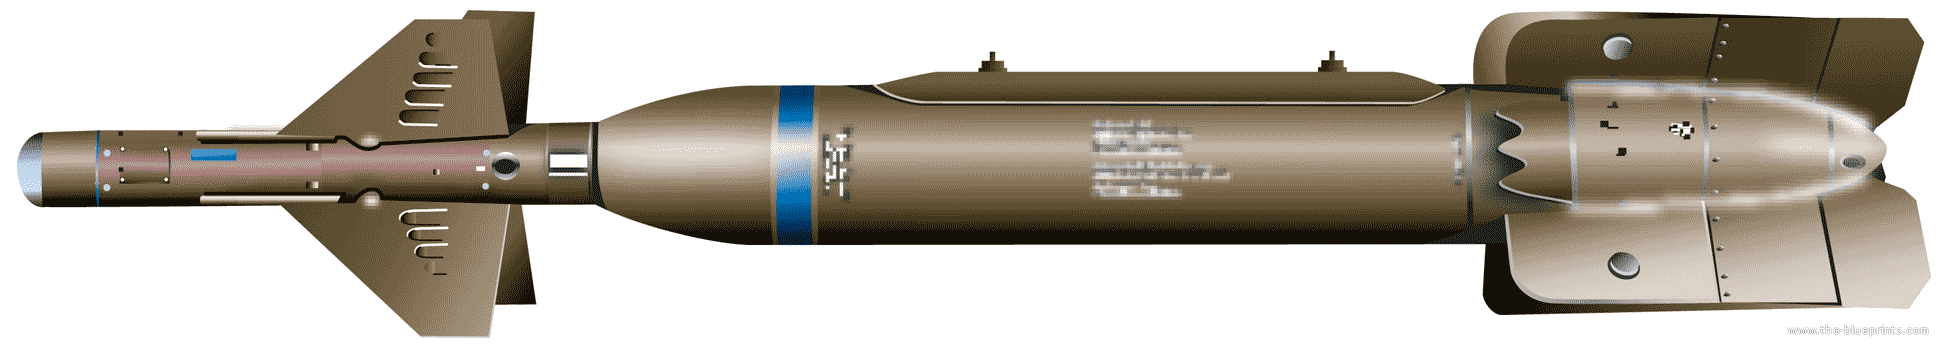 gbu-24-paveway-iii-laser-guided-bomb.gif